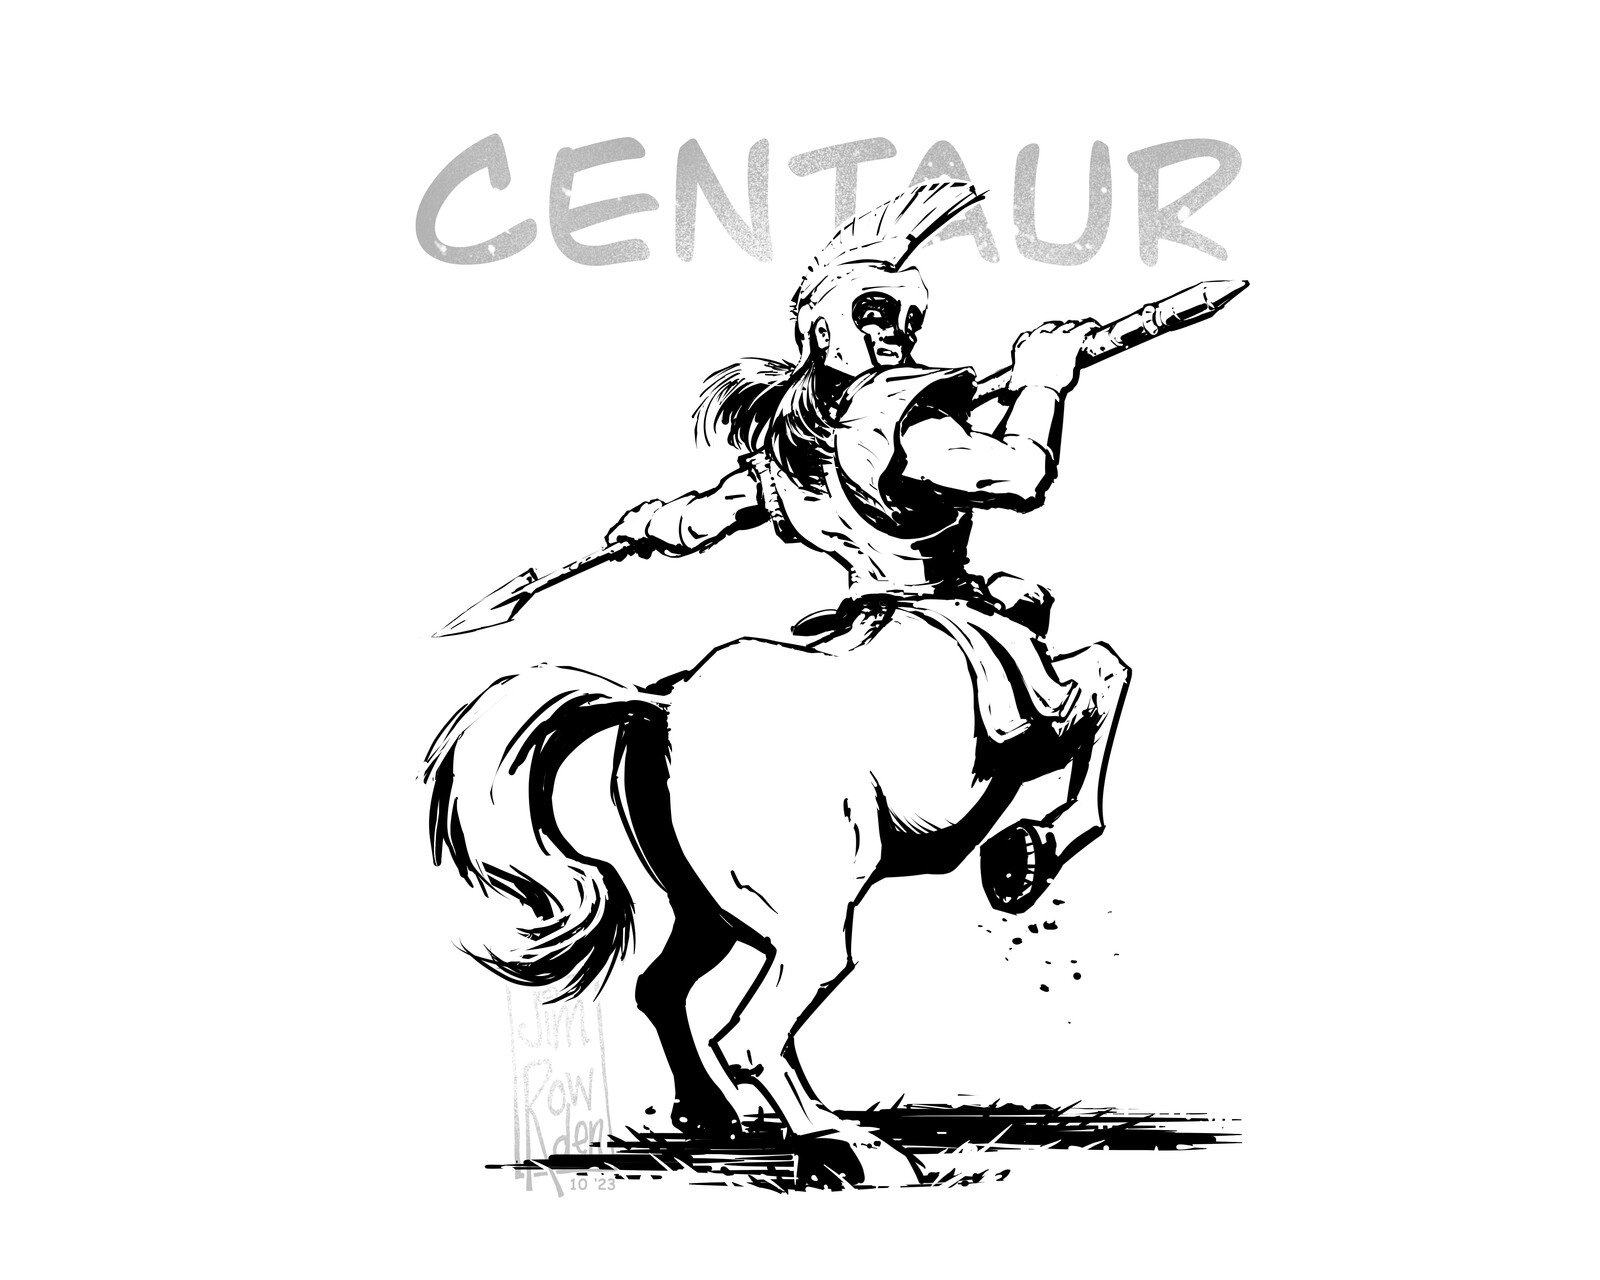 The Centaur